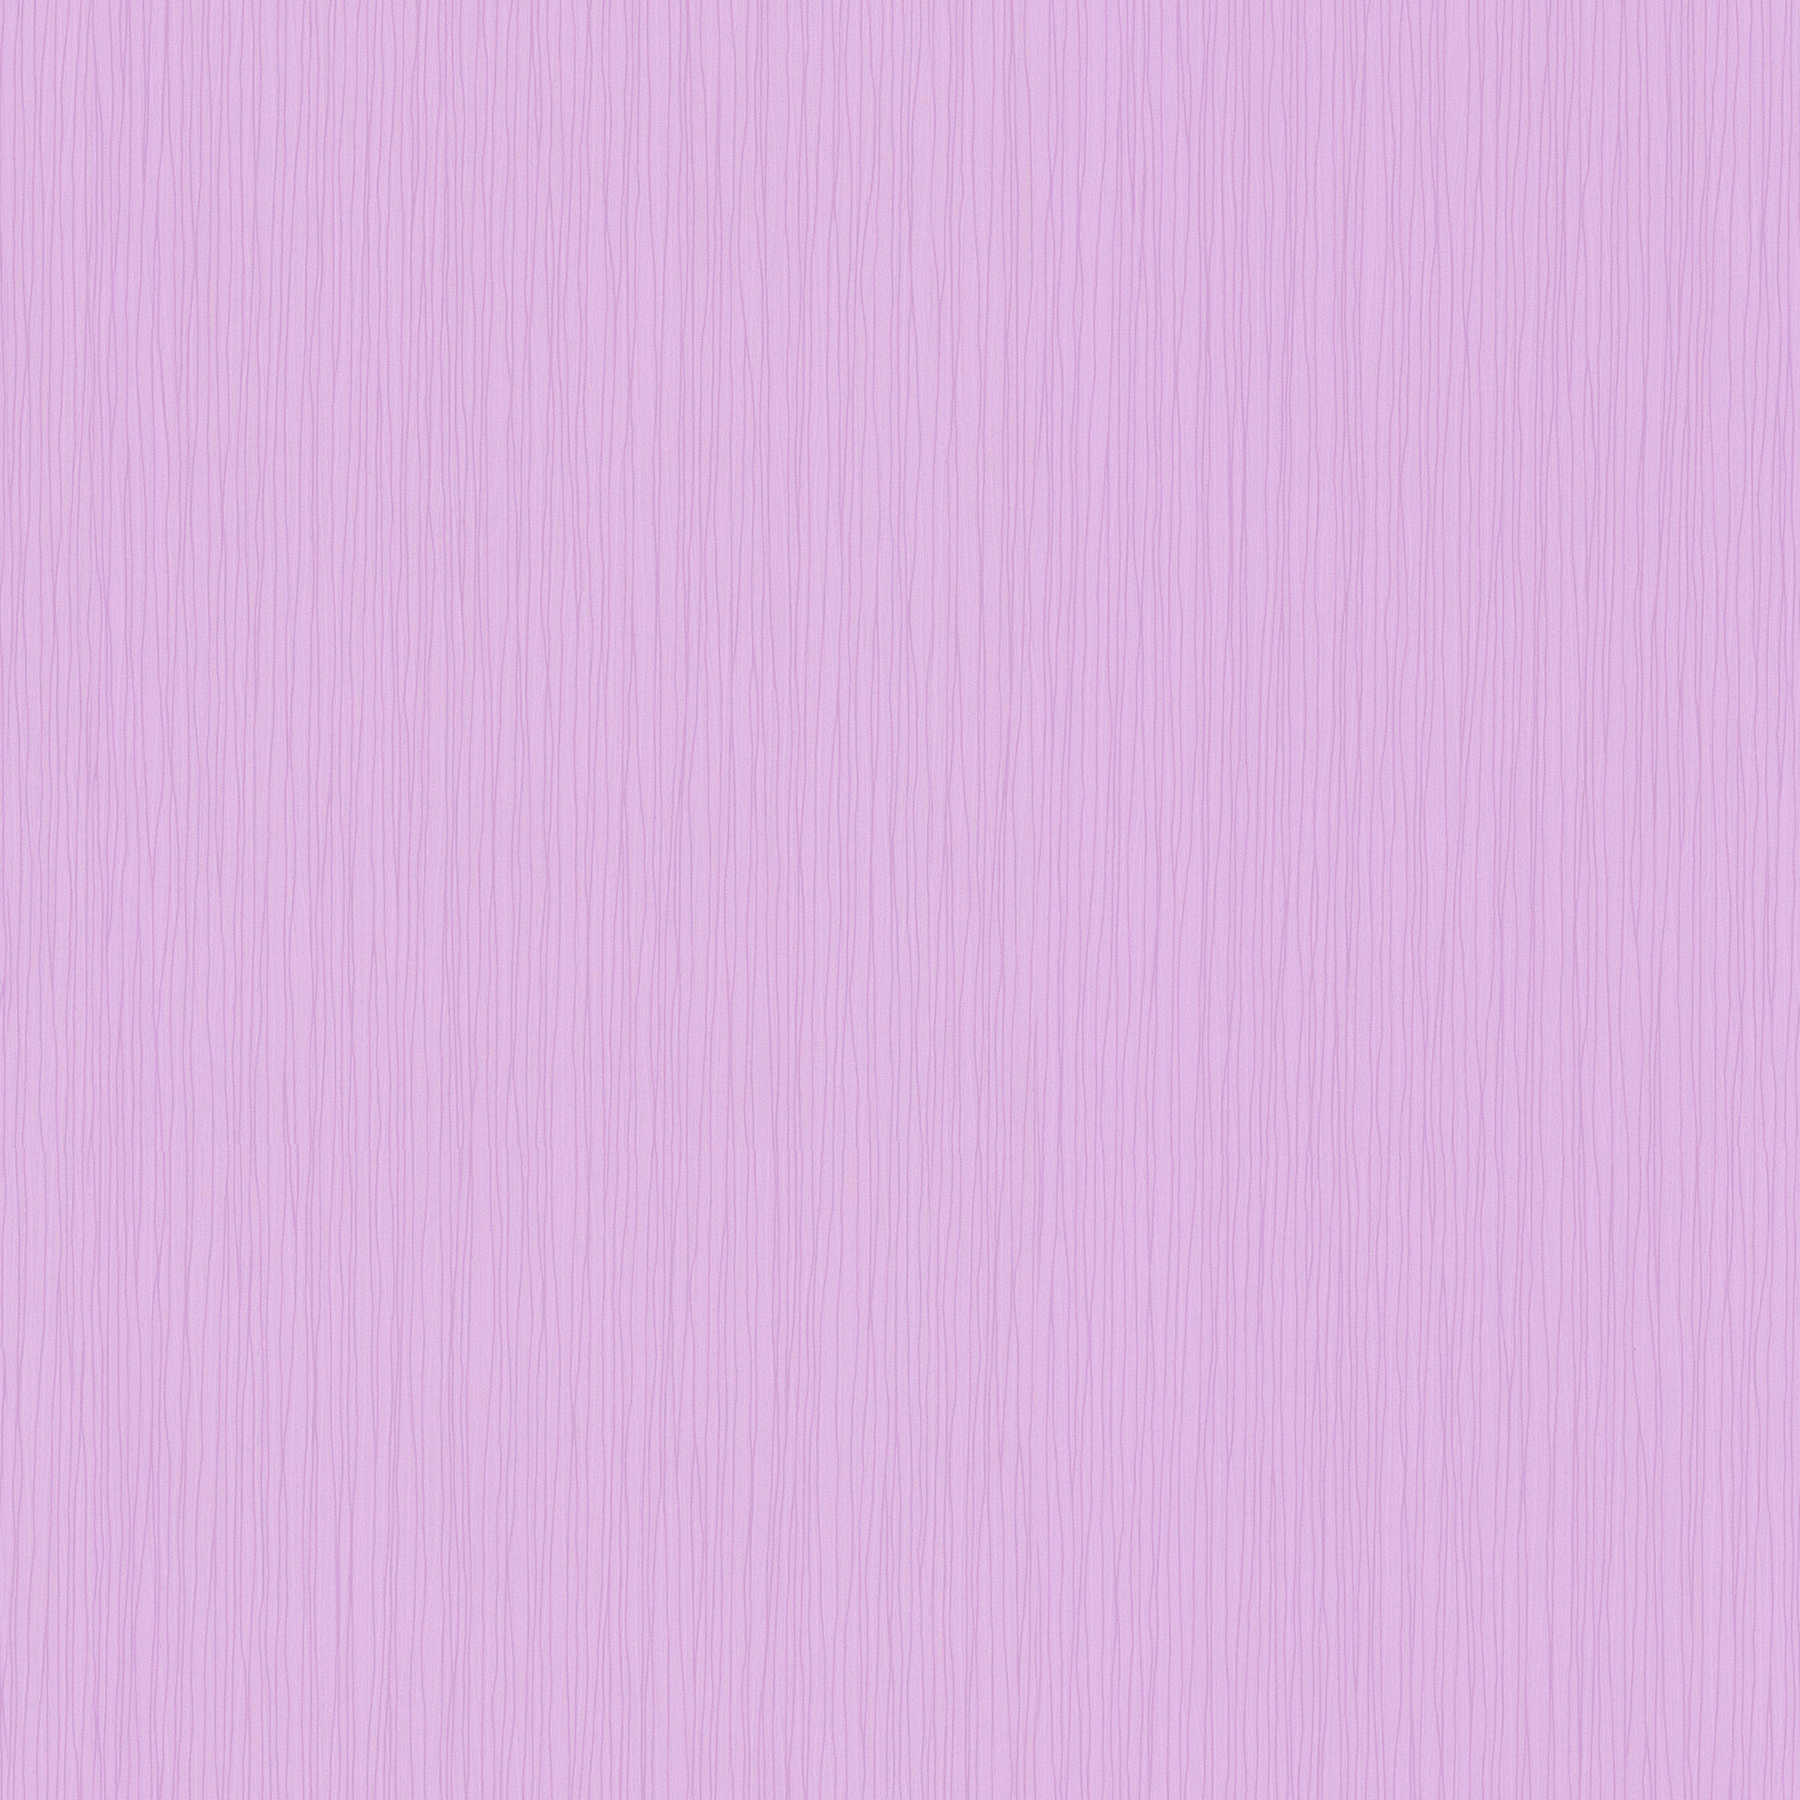         Paper wallpaper purple plain, narrow line pattern
    